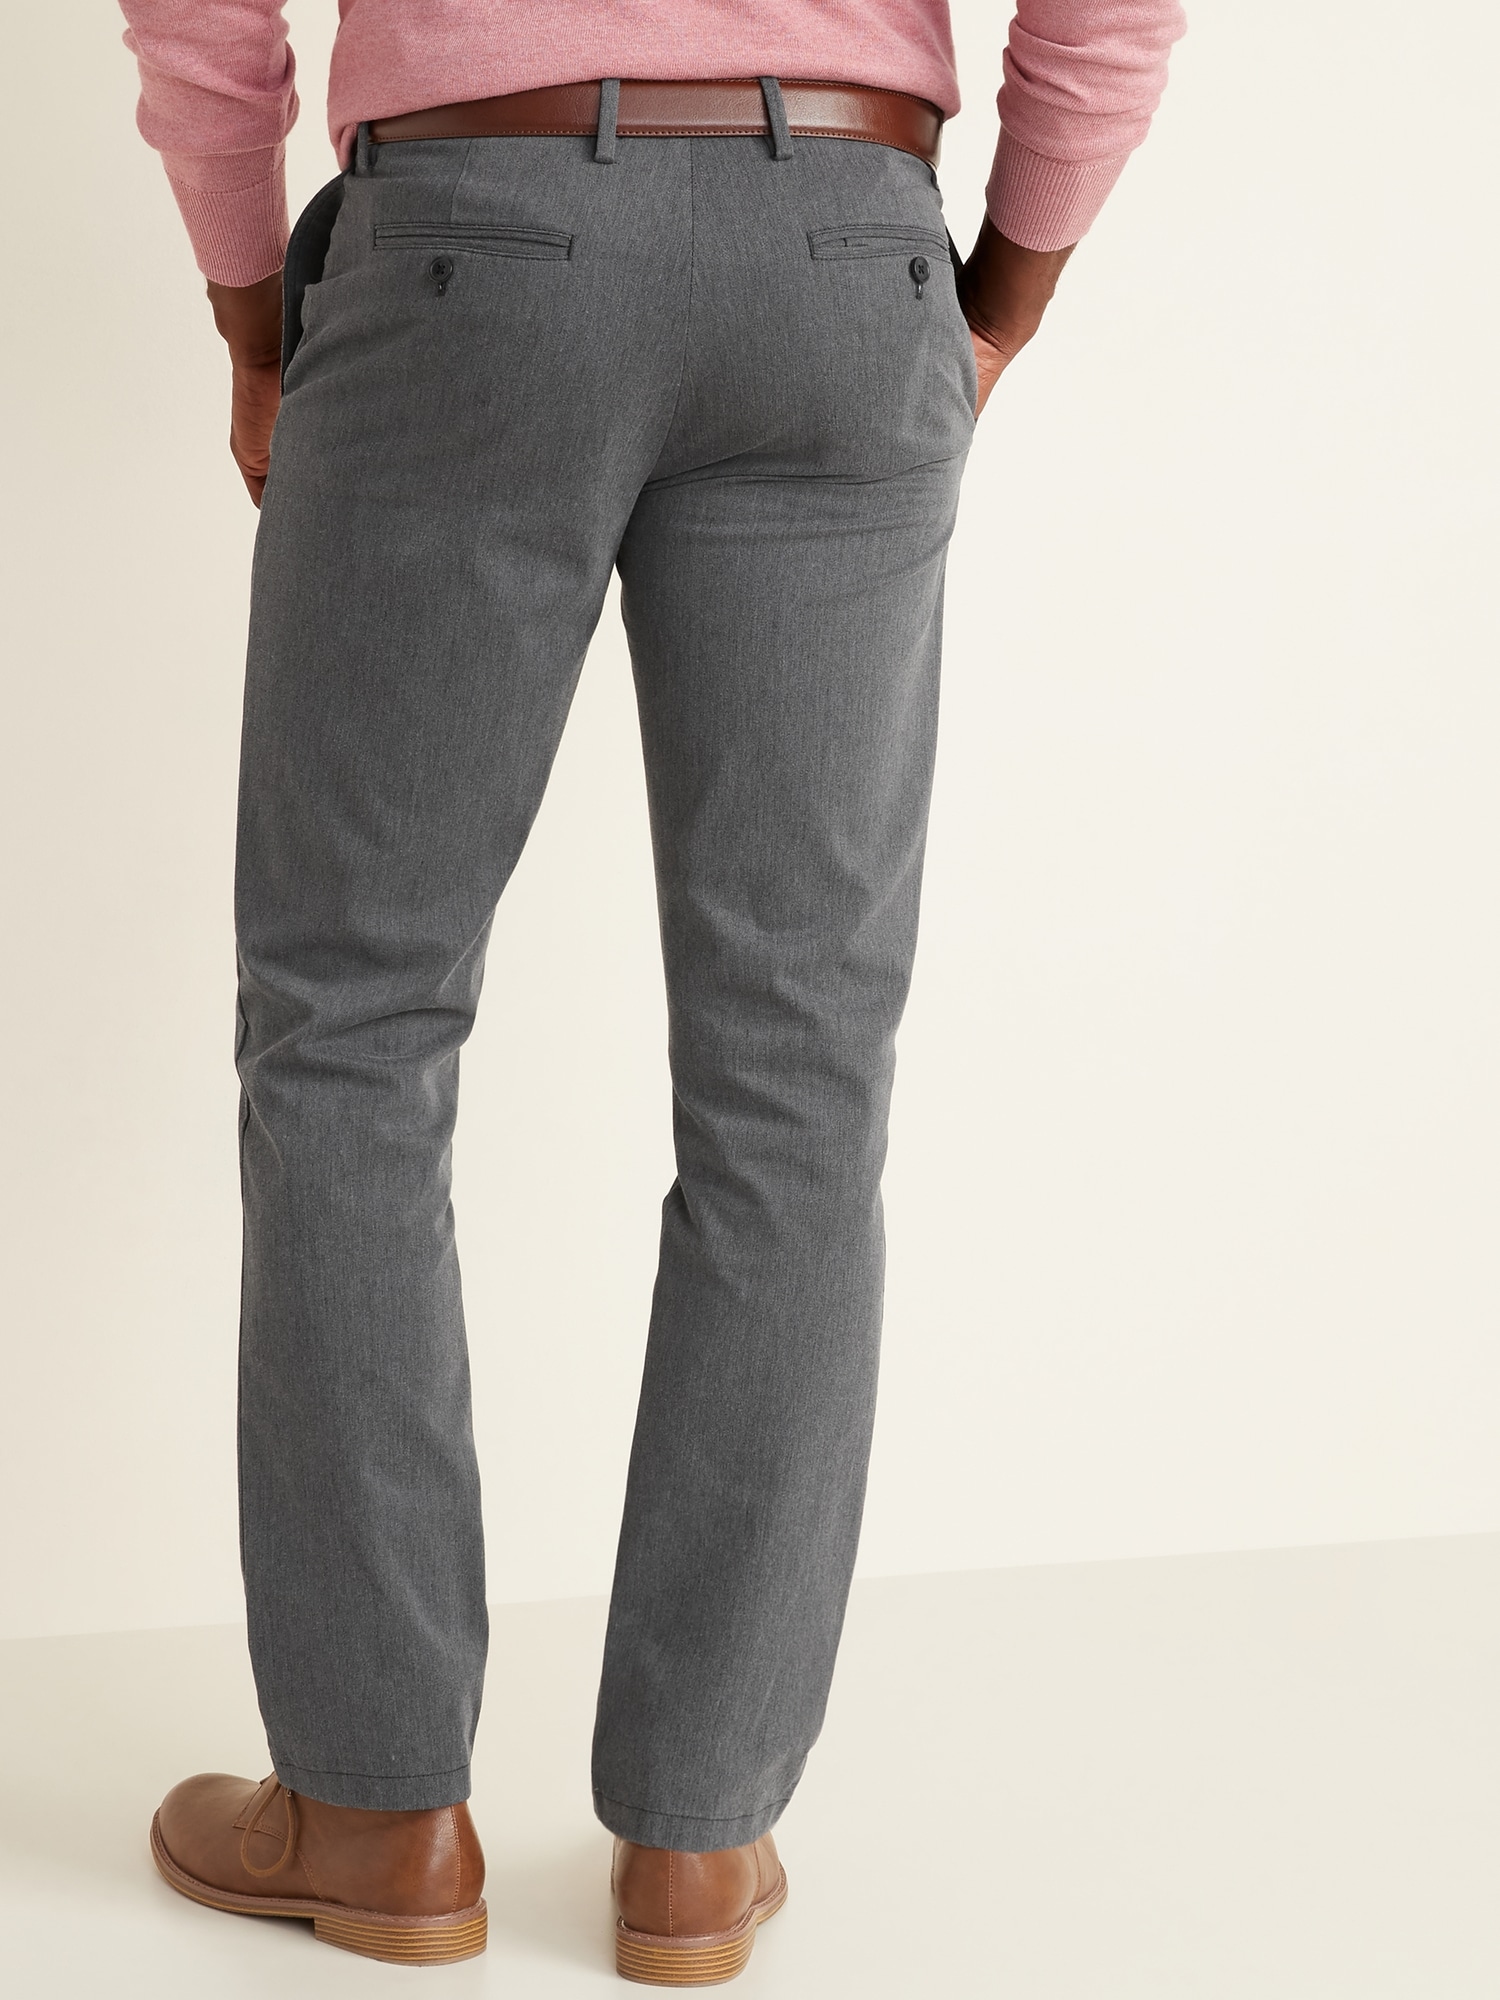 Slim Ultimate Built-In Flex Textured Chino Pants for Men